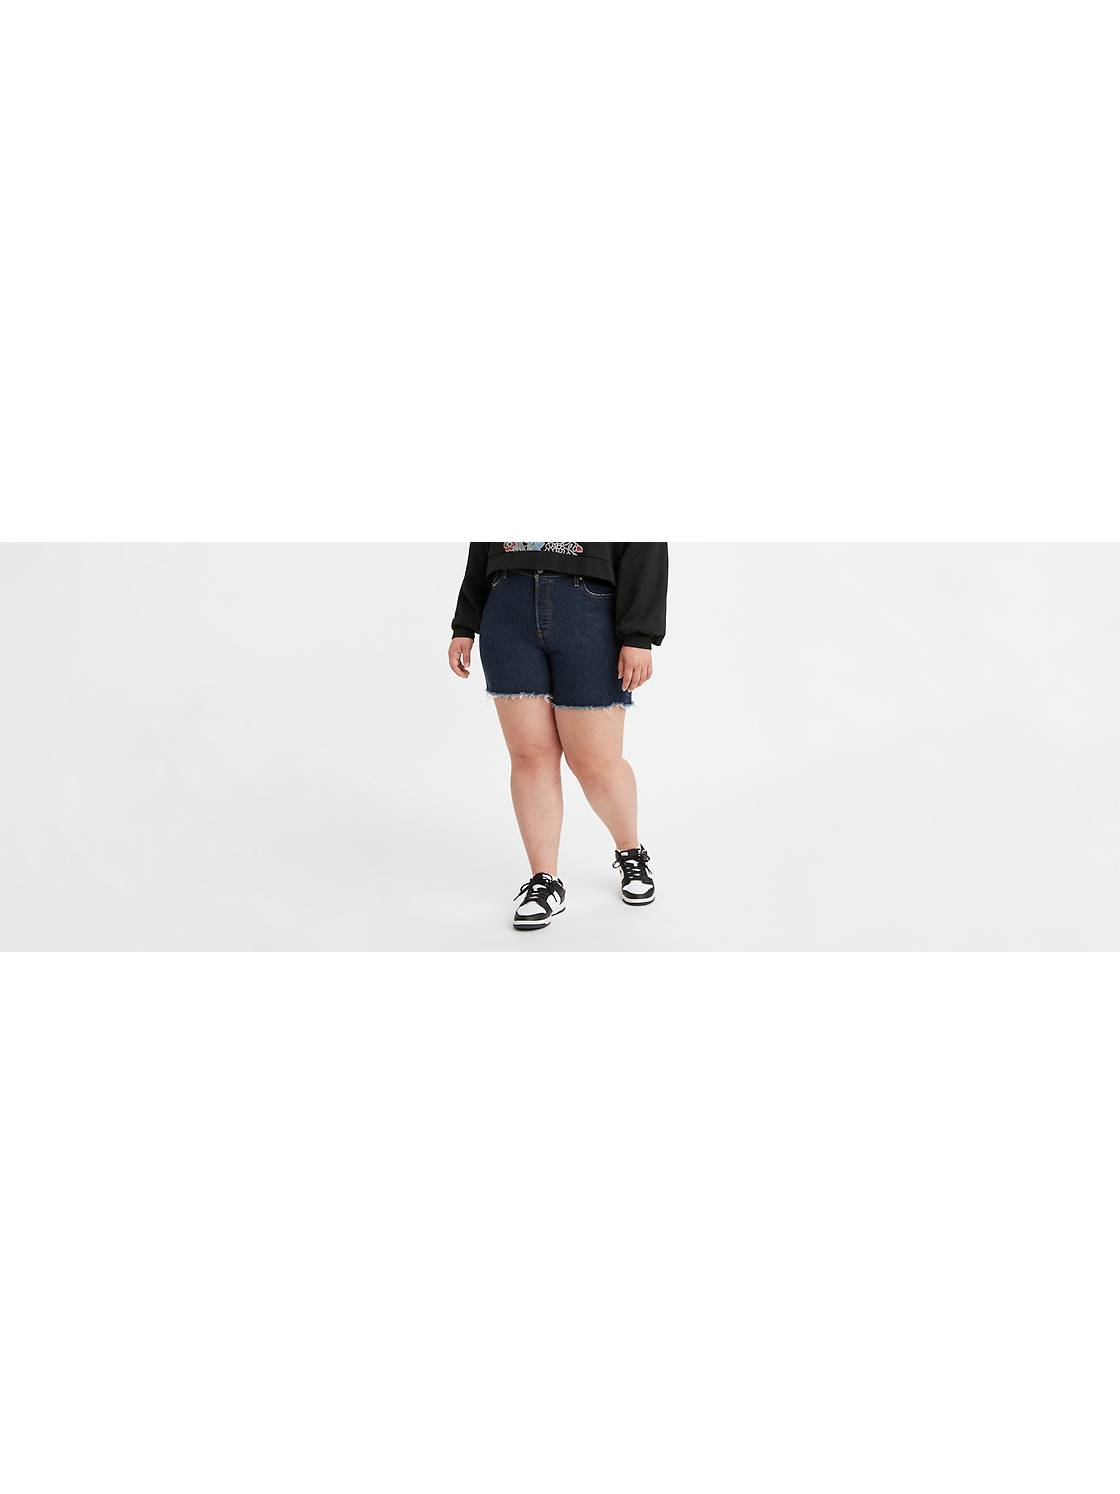 Decepcionado Nathaniel Ward Acera Women's Shorts | Levi's® US